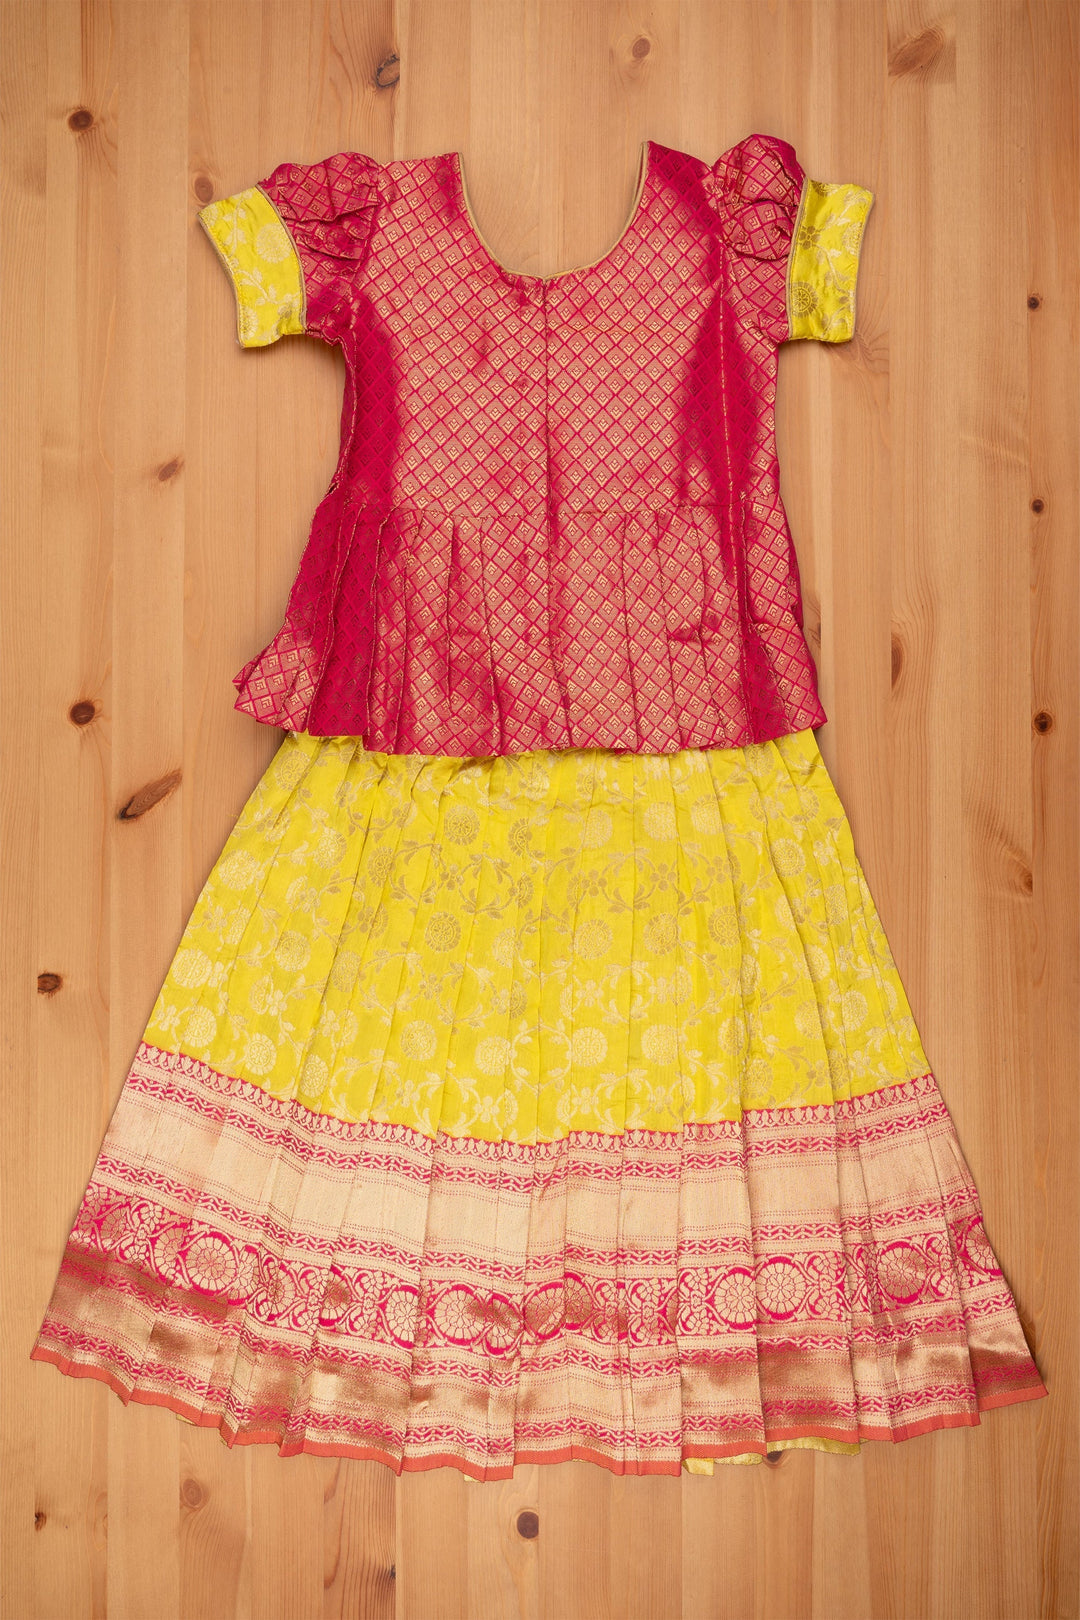 The Nesavu Pattu Pavadai Dazzling Brocade Pink Peplum Top with Banarasi Yellow Pattu Langa: Classic Silk Beauty Nesavu Banaras Silk Pattu Pavadai | Pattu Pavadai Sattai Designs | The Nesavu